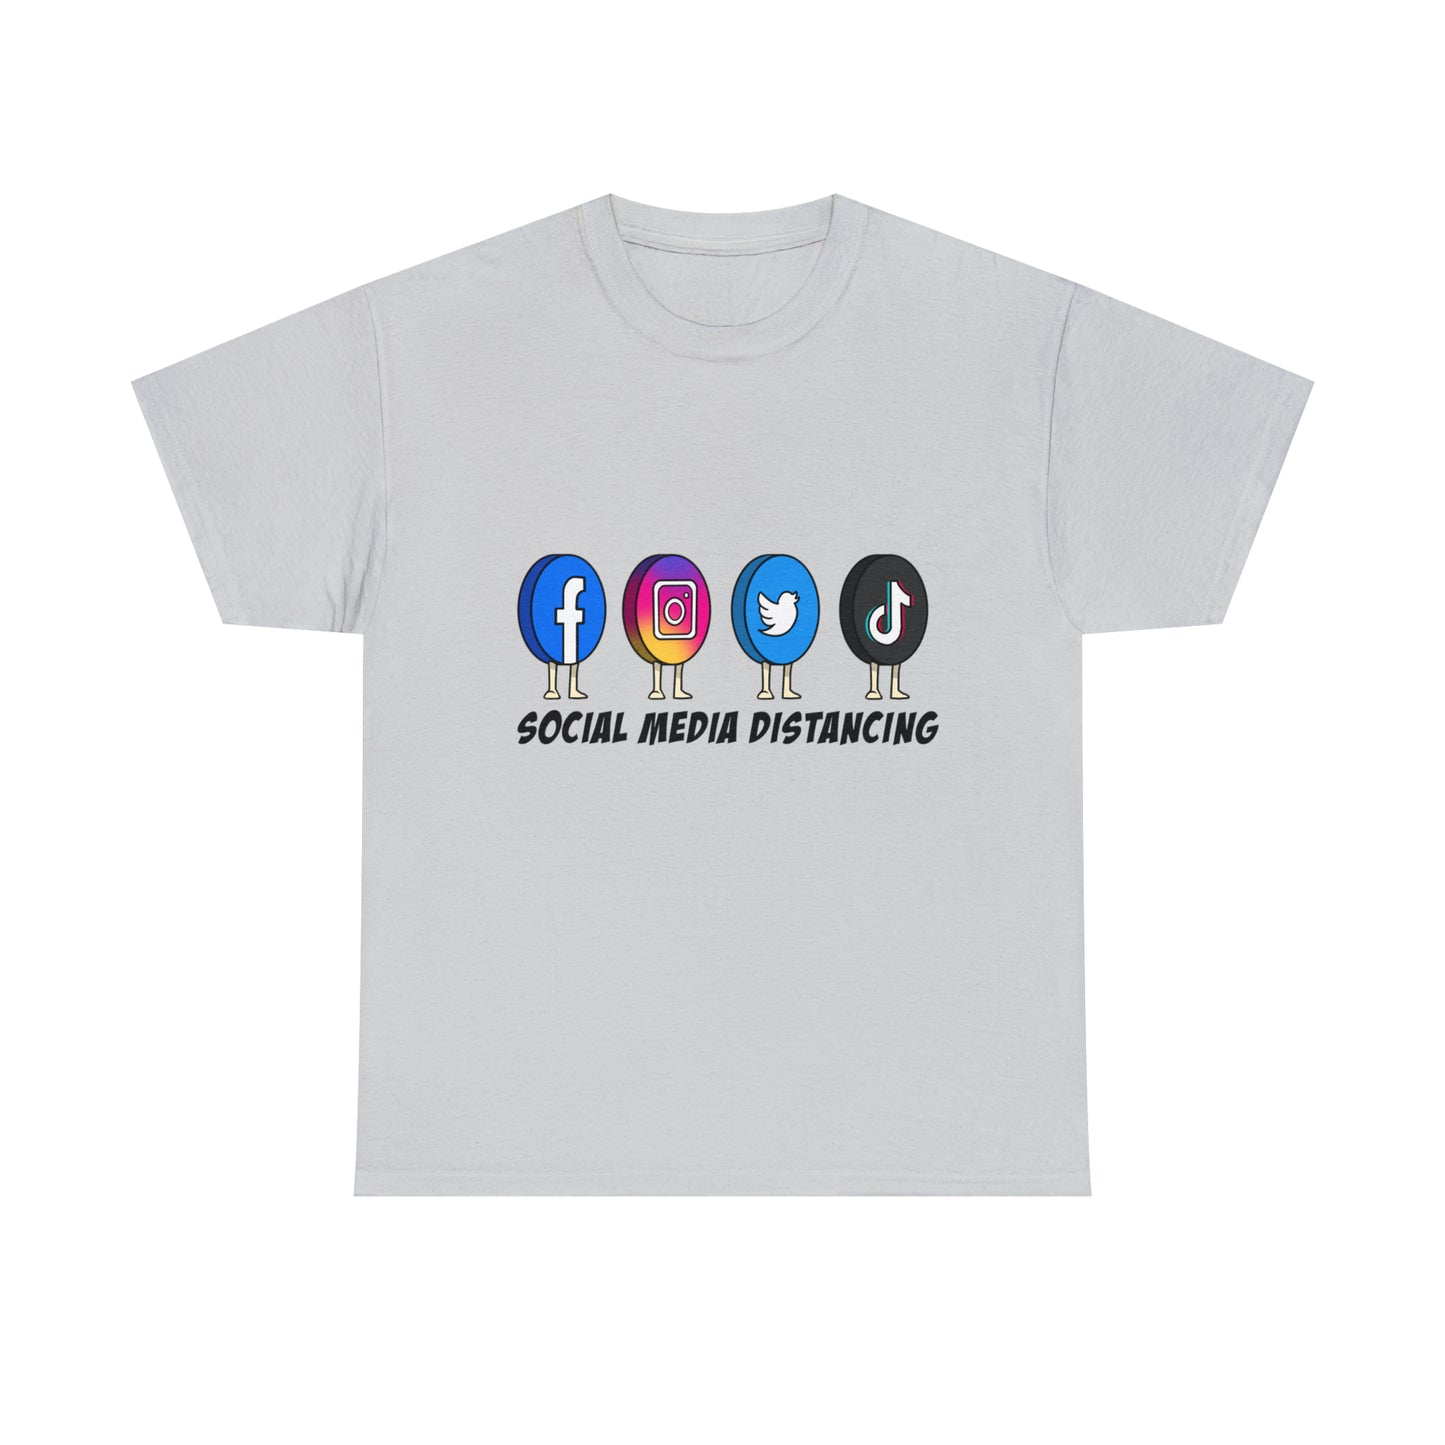 Custom Parody T-shirt, Social Media Distancing design